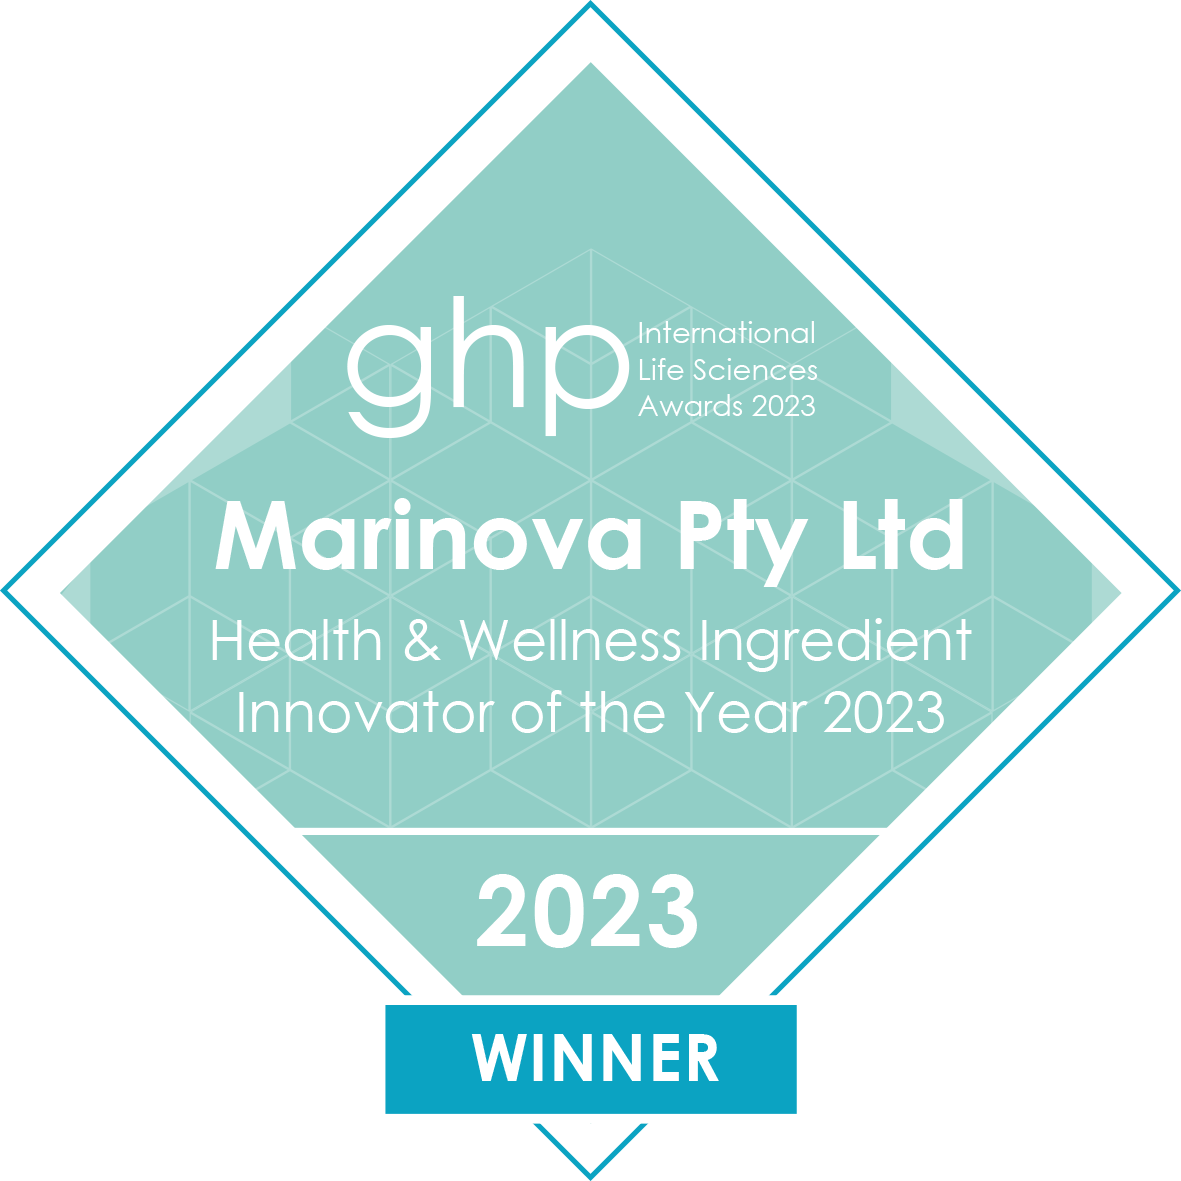 GHP International Life Sciences Awards 2023 - Marinova Pty Ltd - Health & Wellness Ingredient Innovator of the Year 2023